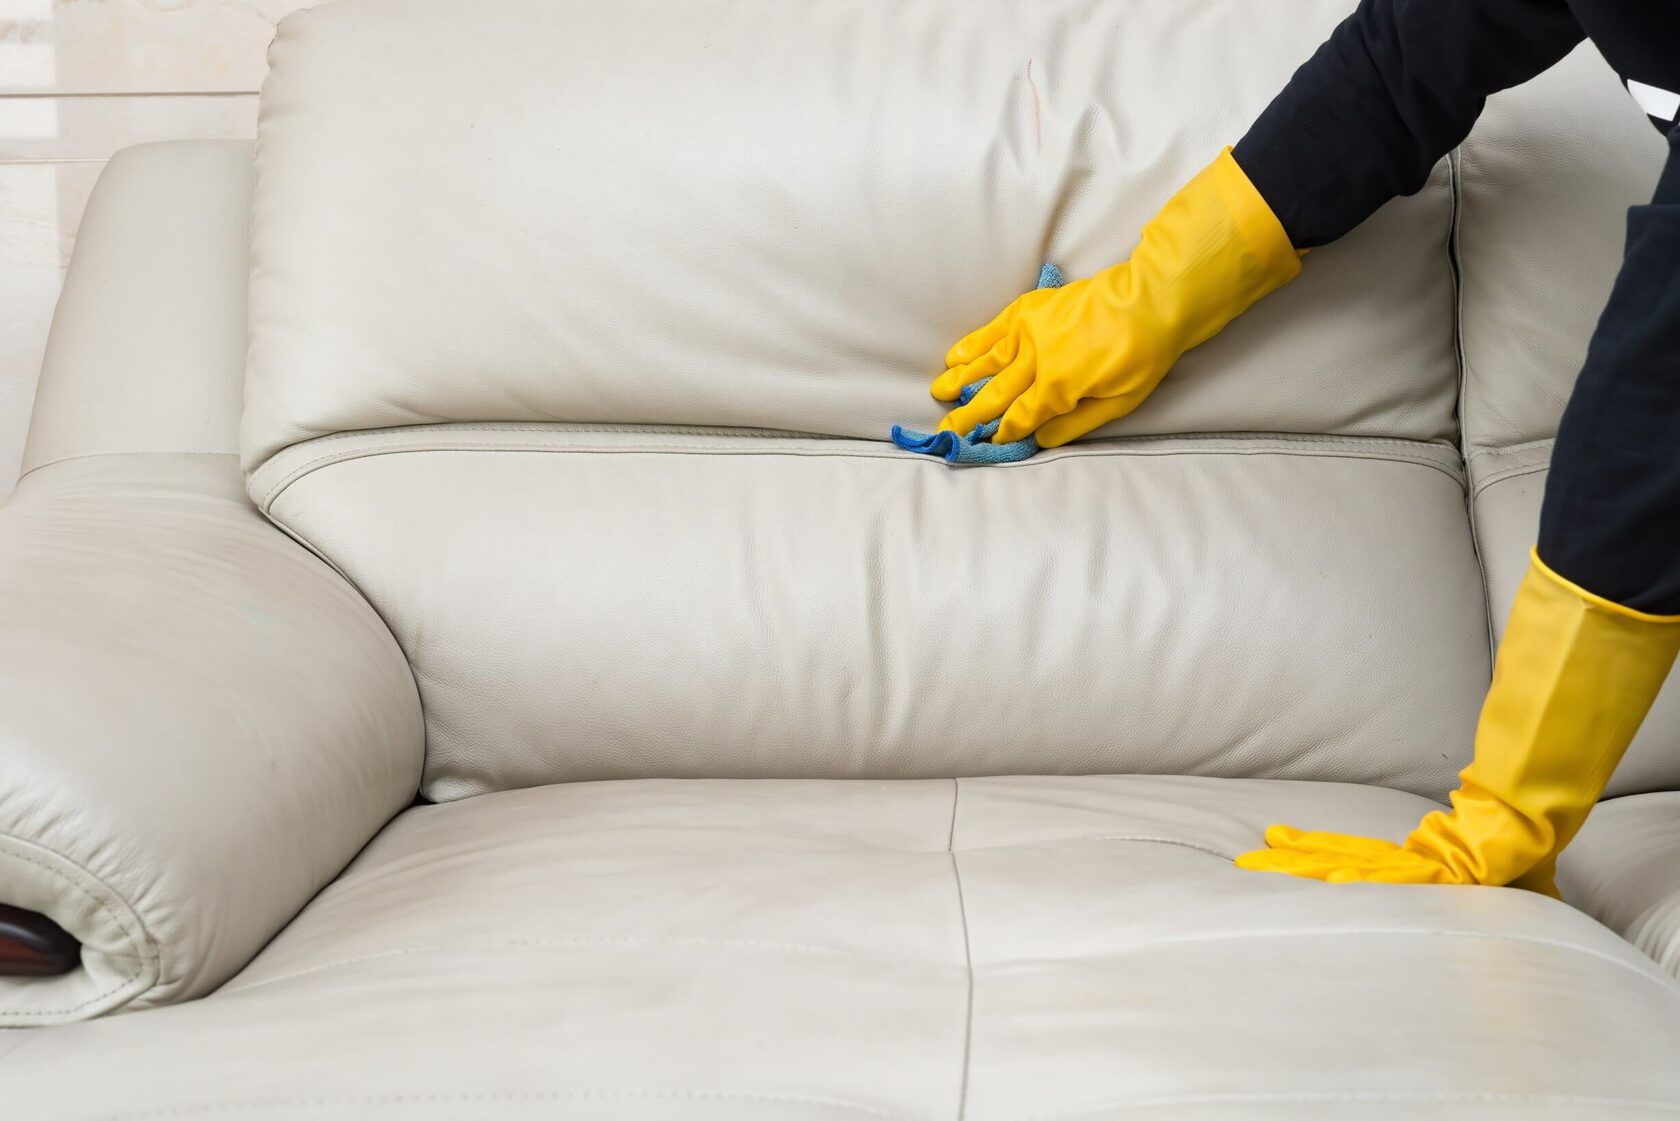 убрать пятно мочи с дивана в домашних условиях